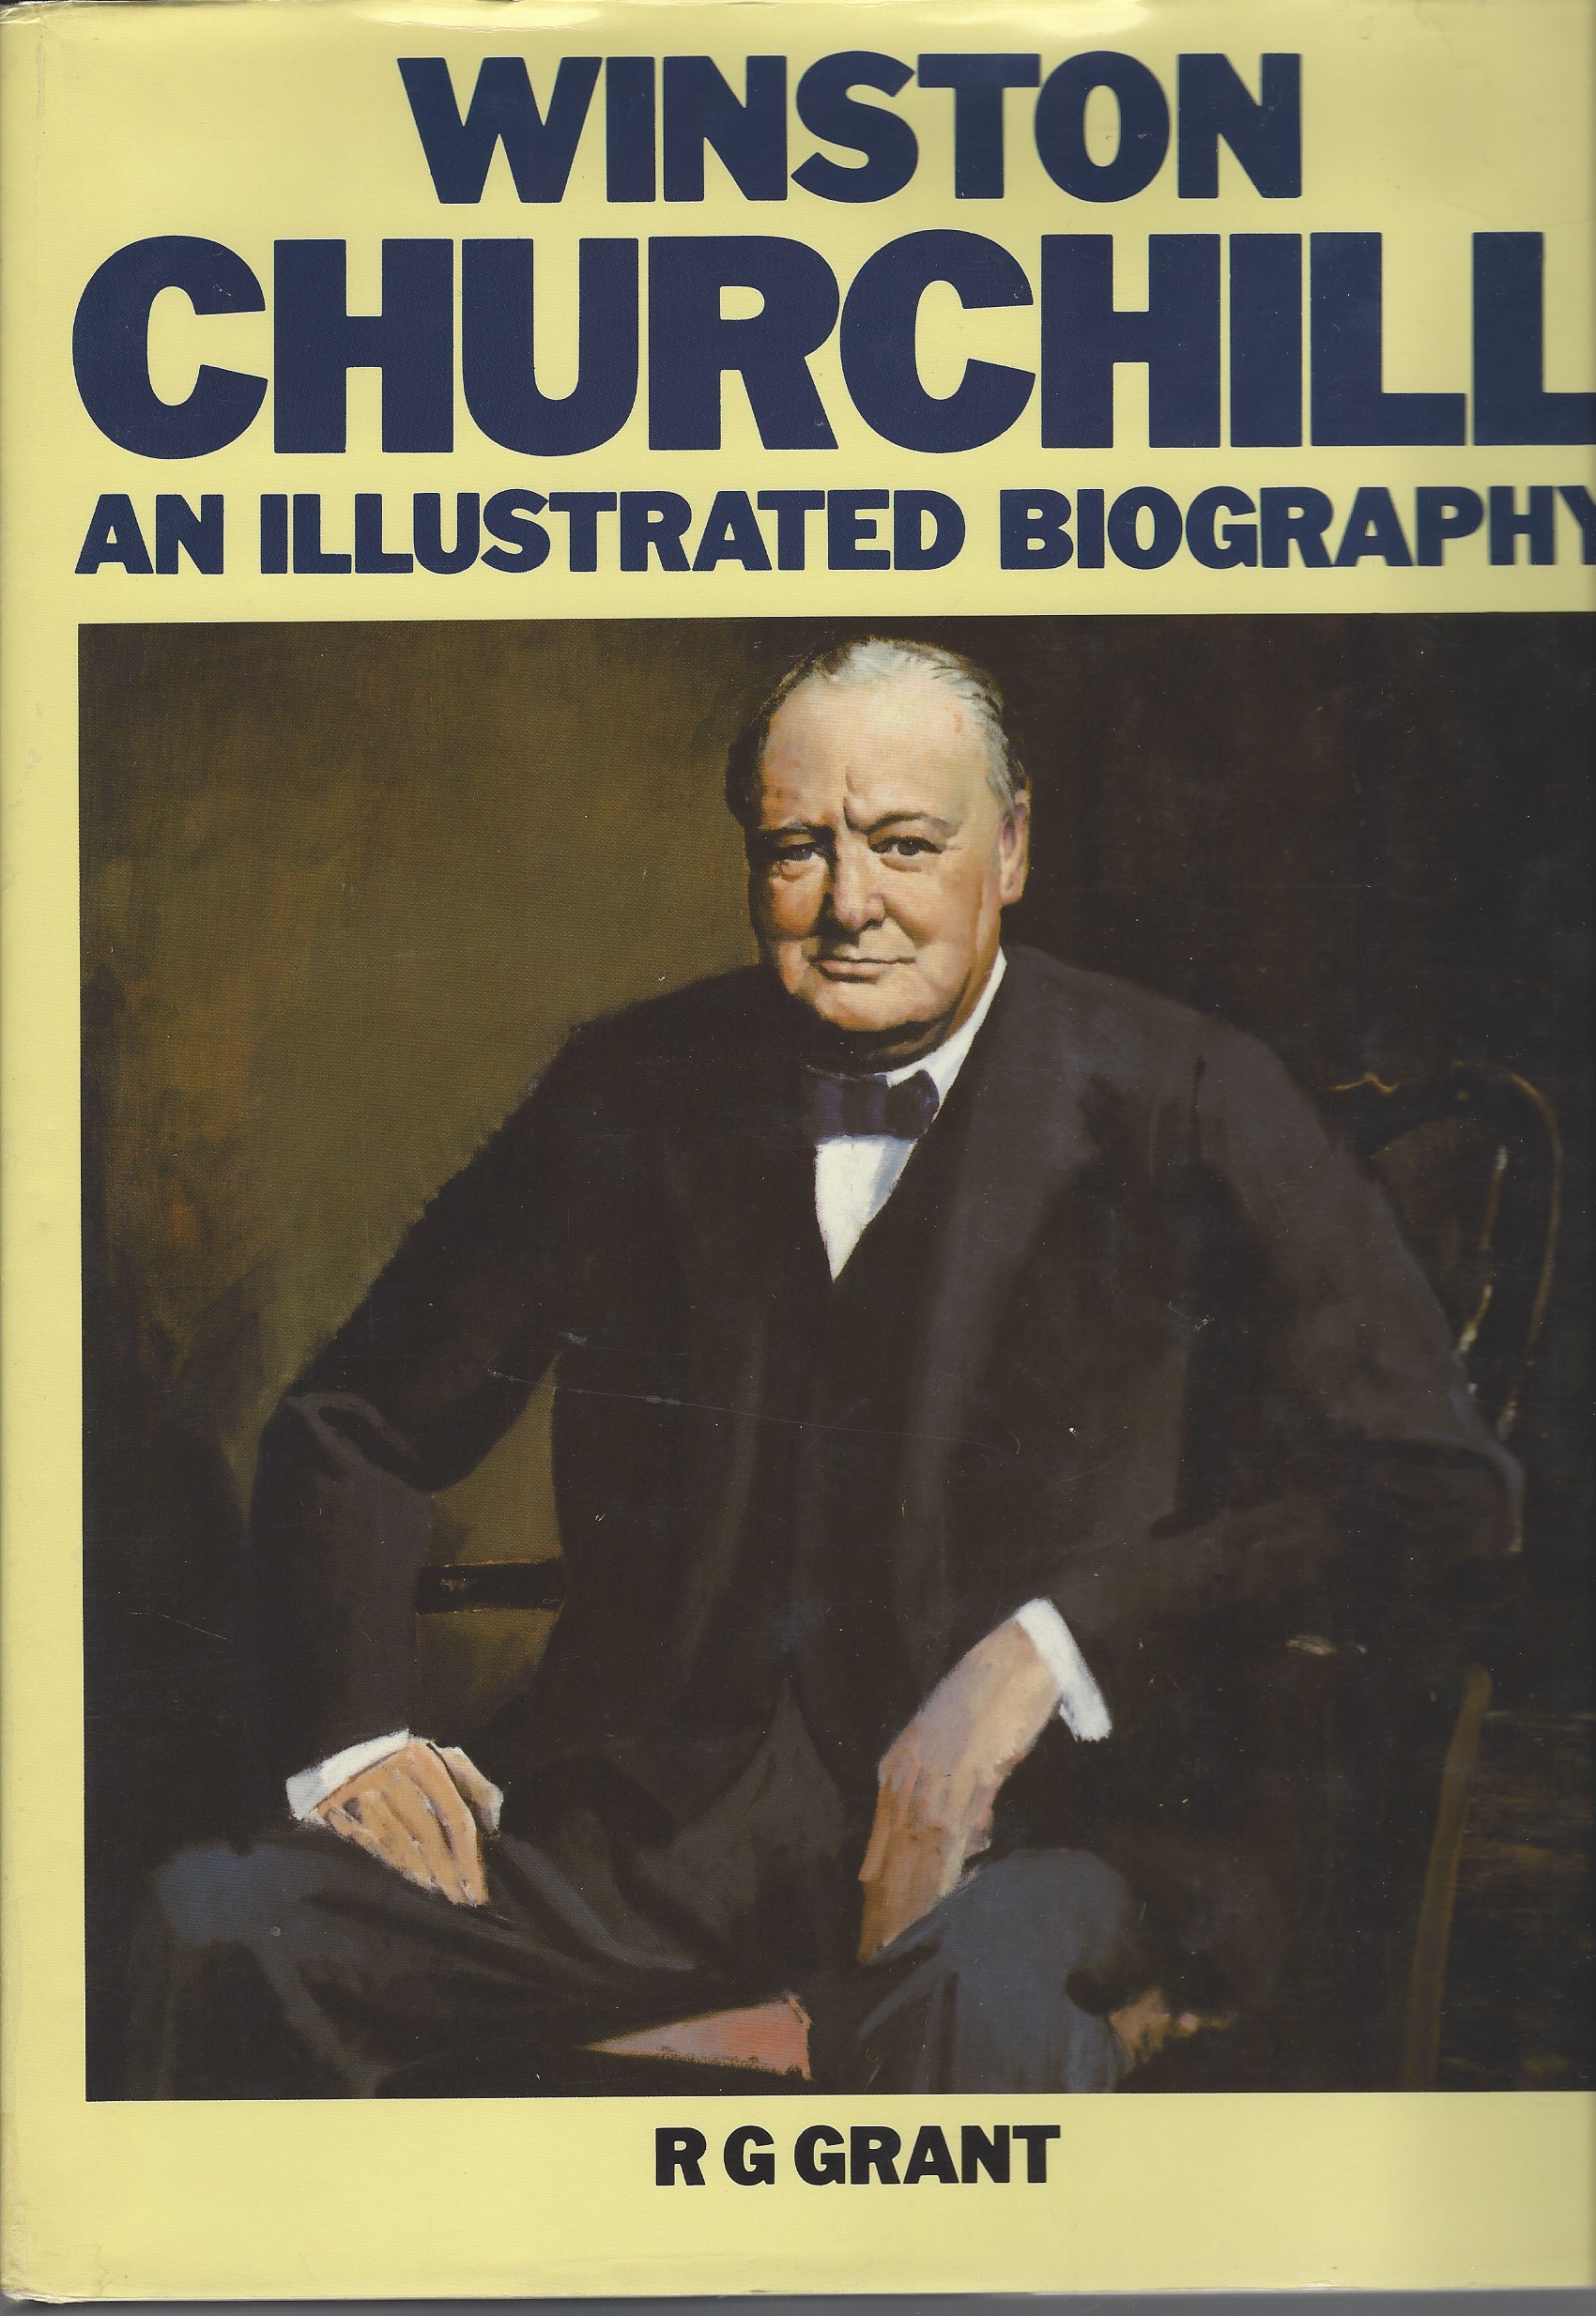 GRANT R.G. - Winston Churchill: An Illustrated Biography